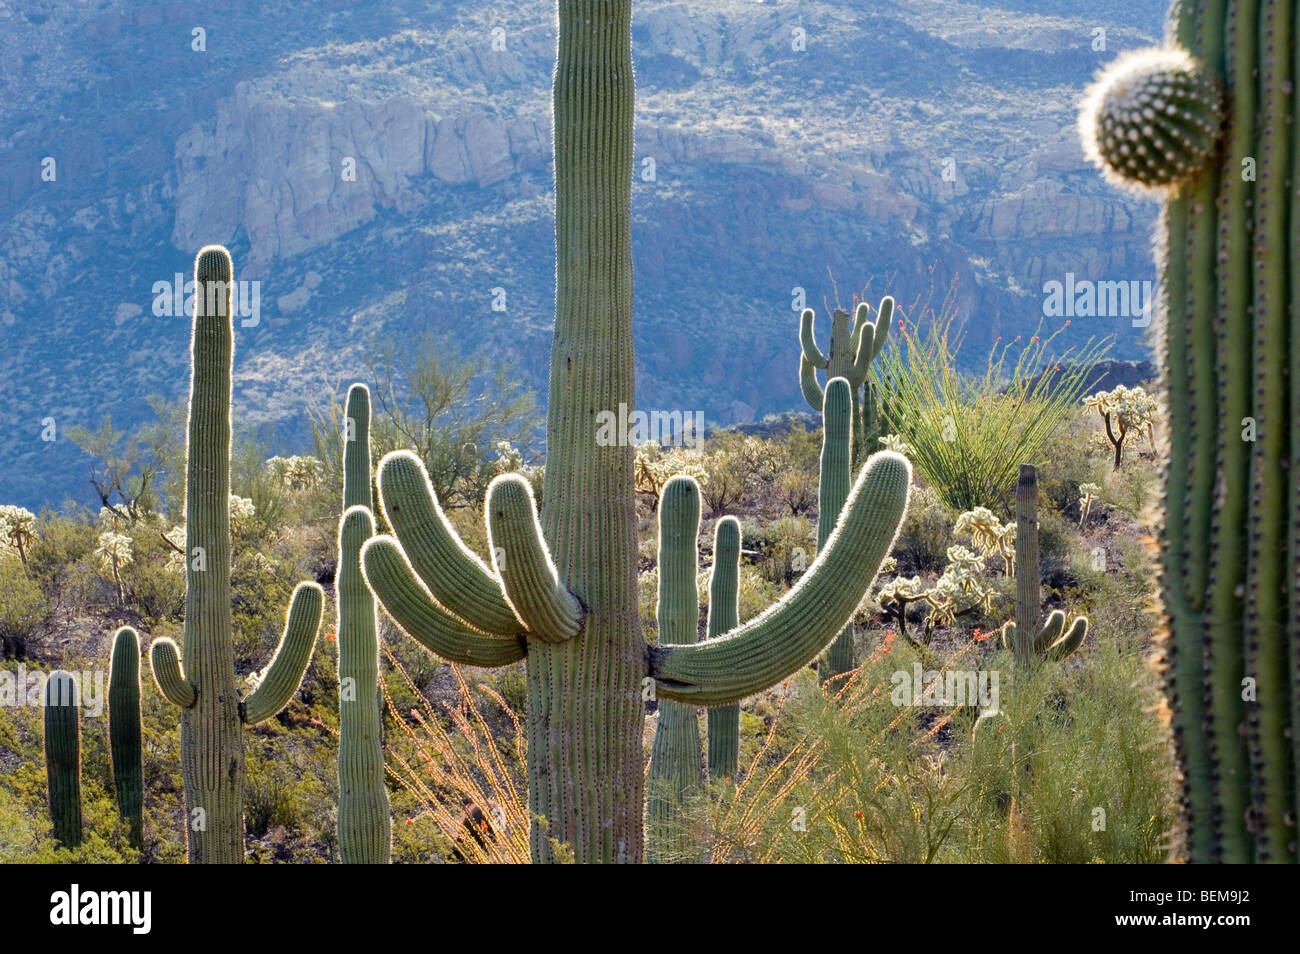 Saguaro cactus (Carnegiea gigantea) in the Sonoran desert, Organ Pipe Cactus National Monument, Arizona, US Stock Photo